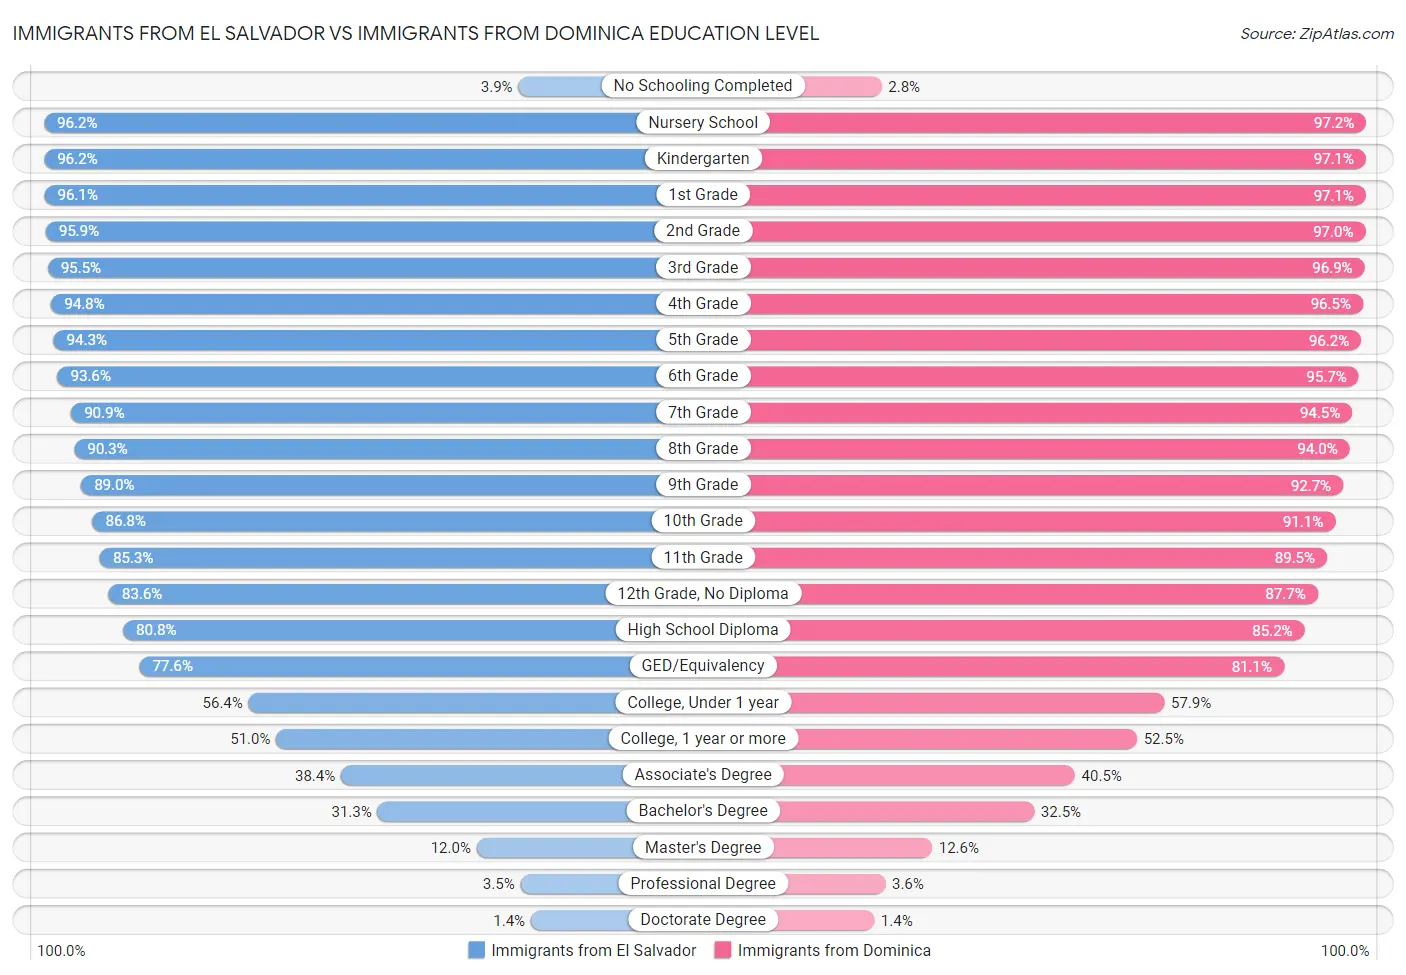 Immigrants from El Salvador vs Immigrants from Dominica Education Level